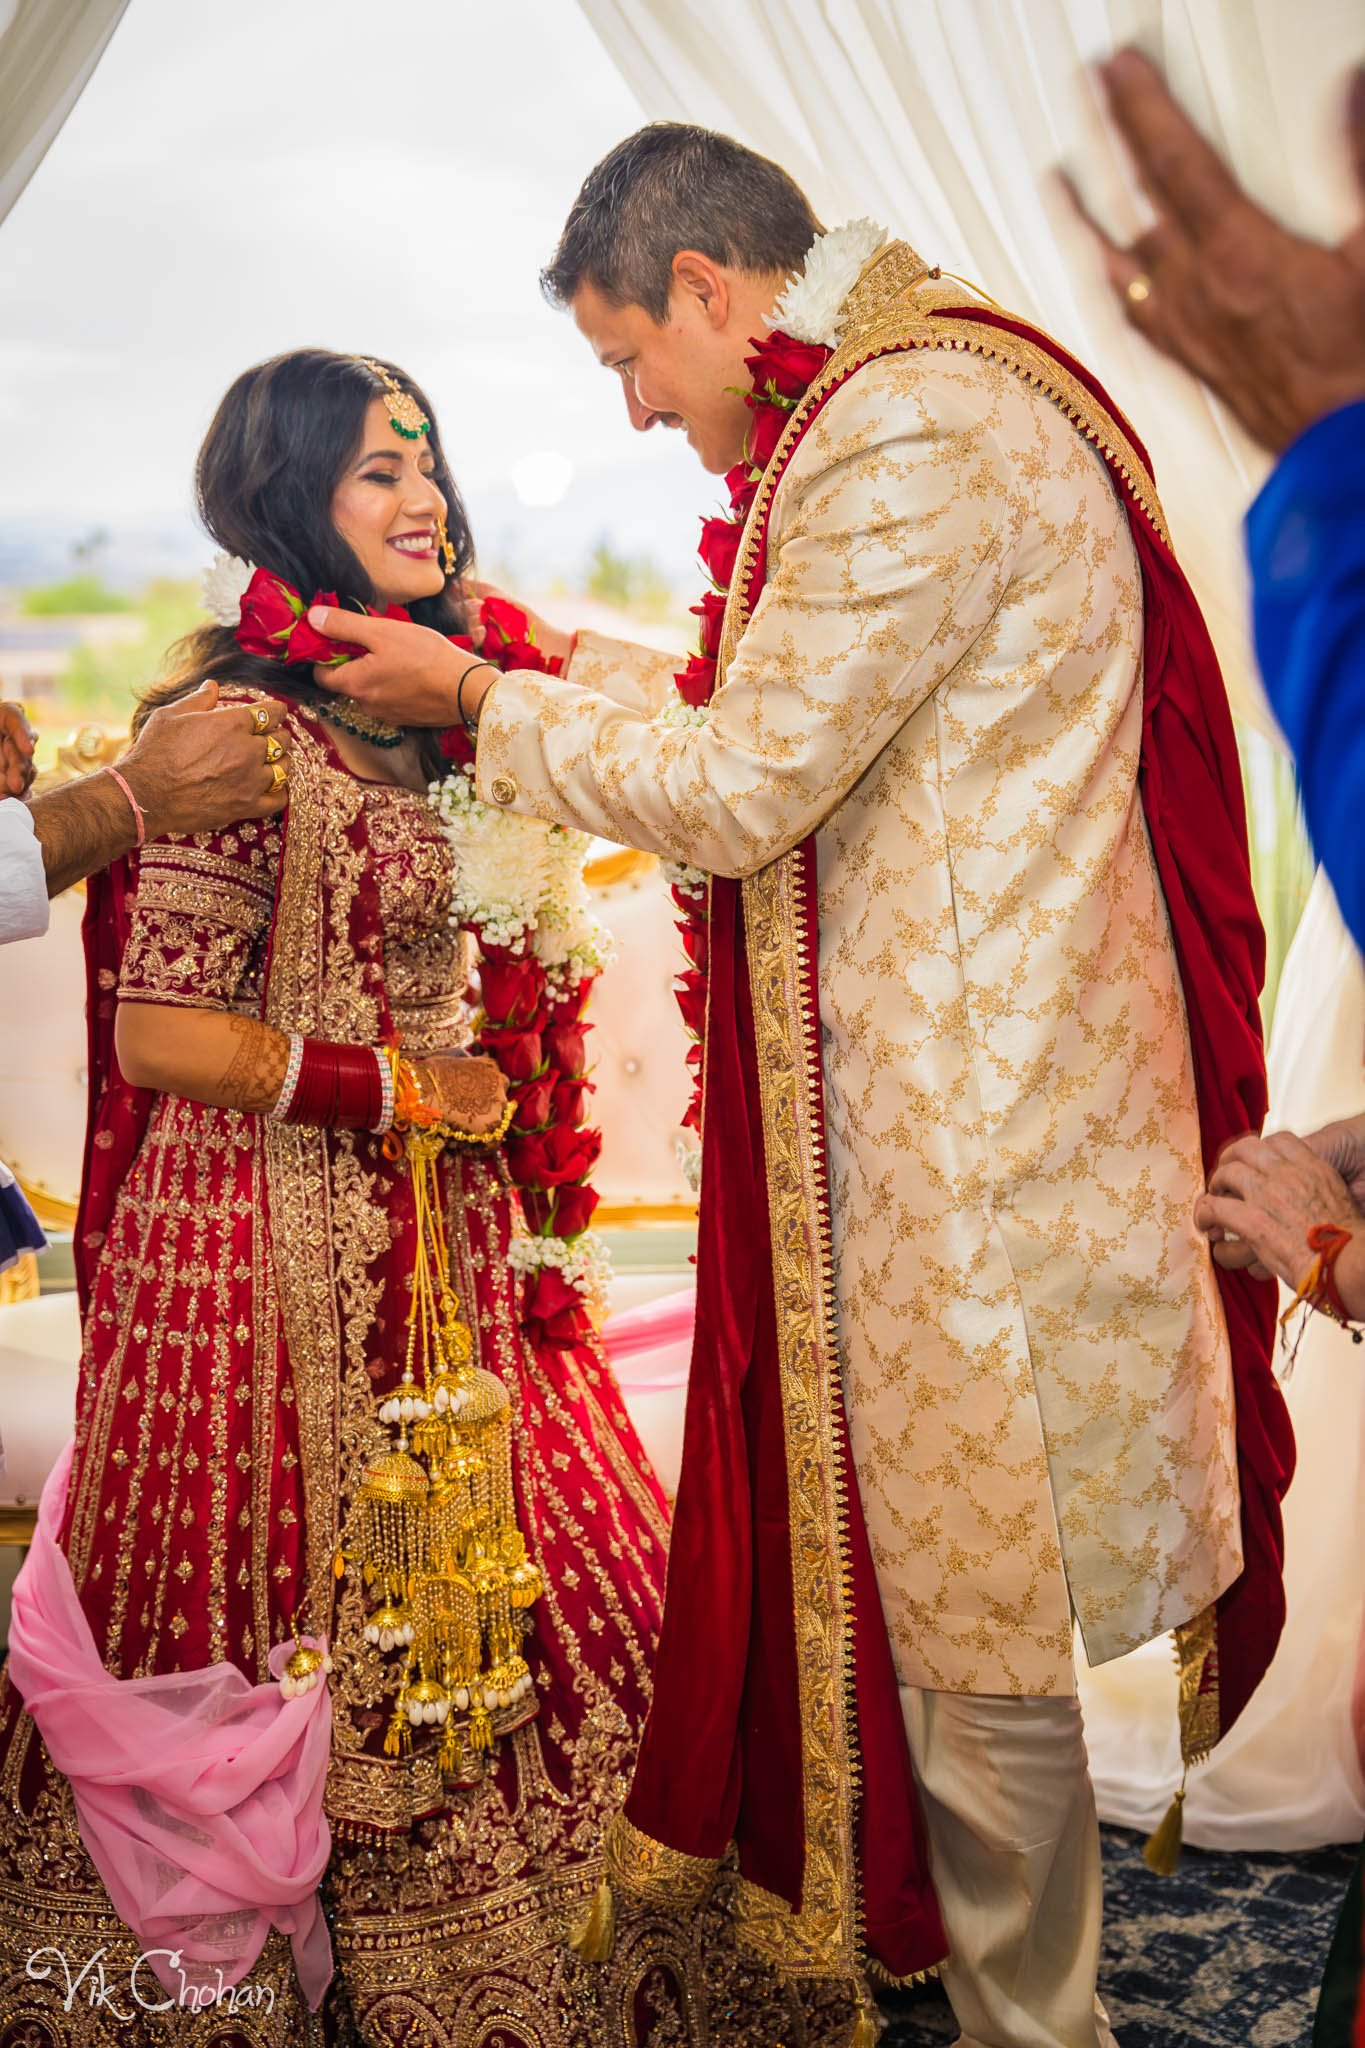 2022-06-09-Annie-&-Steven-Las-Vegas-Indian-Wedding-Ceremony-Photography-Vik-Chohan-Photography-Photo-Booth-Social-Media-VCP-159.jpg